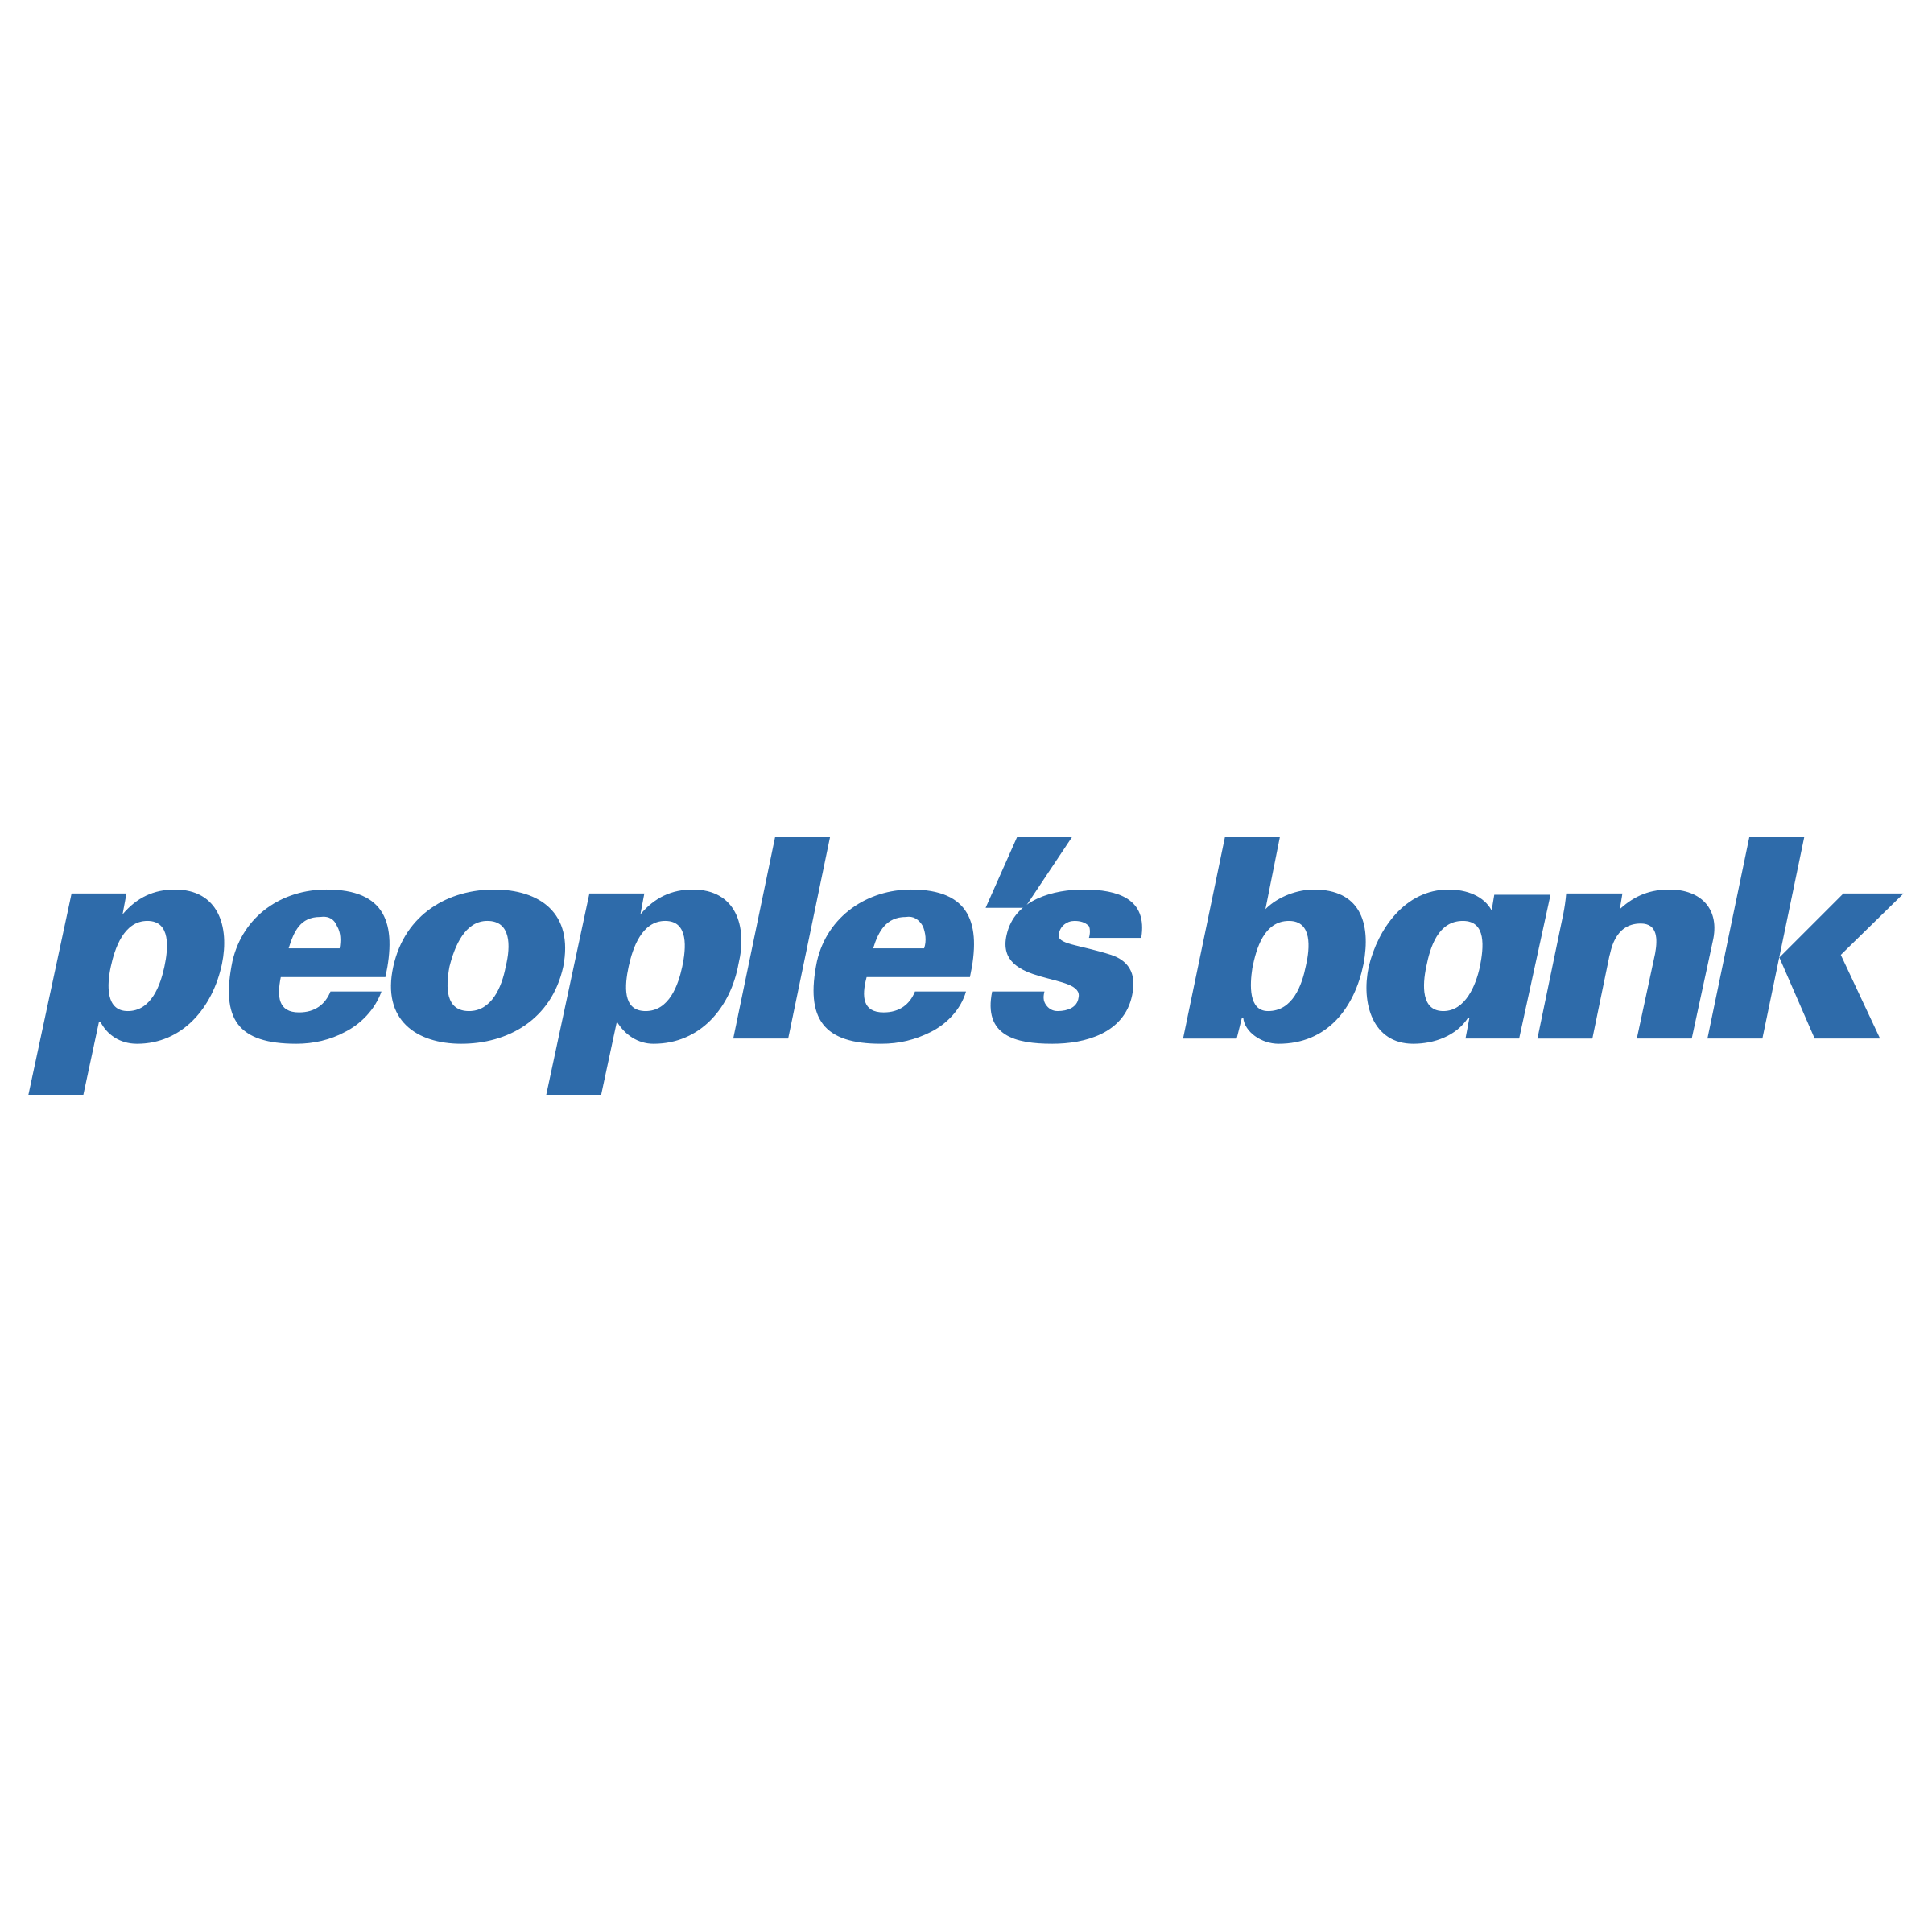 Peoples Bank Logo Png Transparent Svg Vector Freebie Supply Images